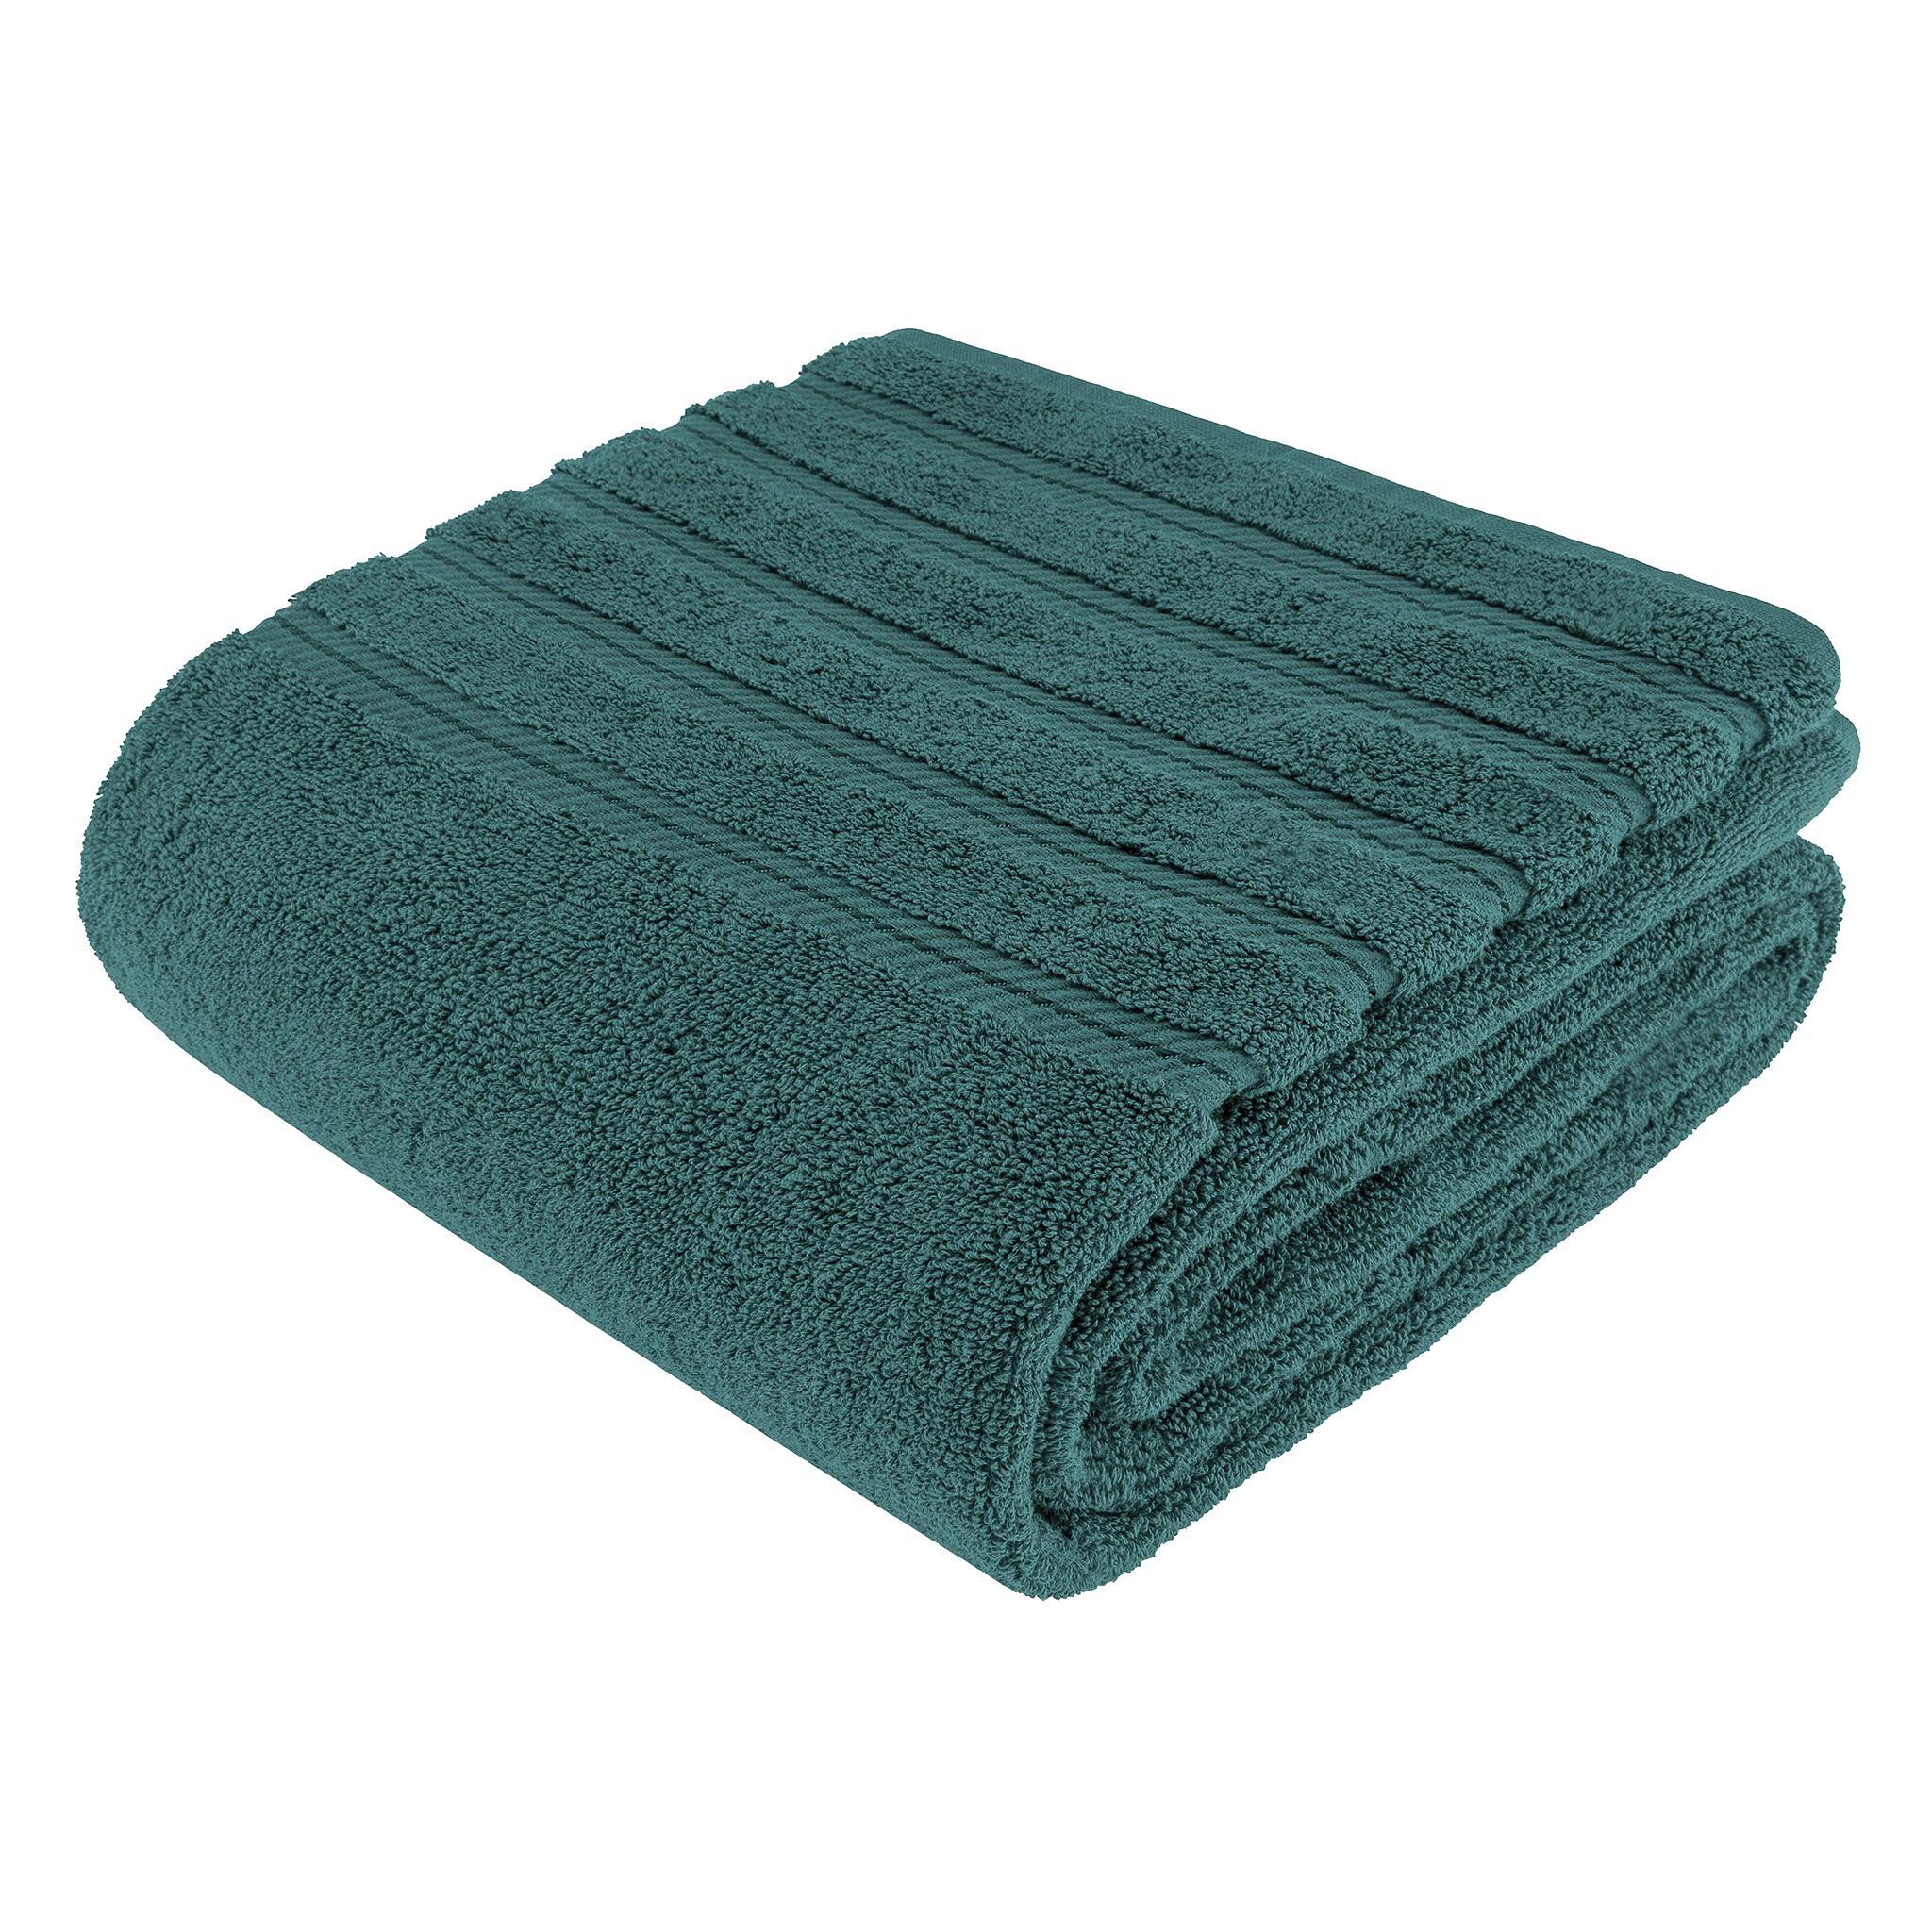 American Soft Linen - 35x70 Jumbo Bath Sheet Turkish Bath Towel - 16 Piece Case Pack - Colonial-Blue - 7